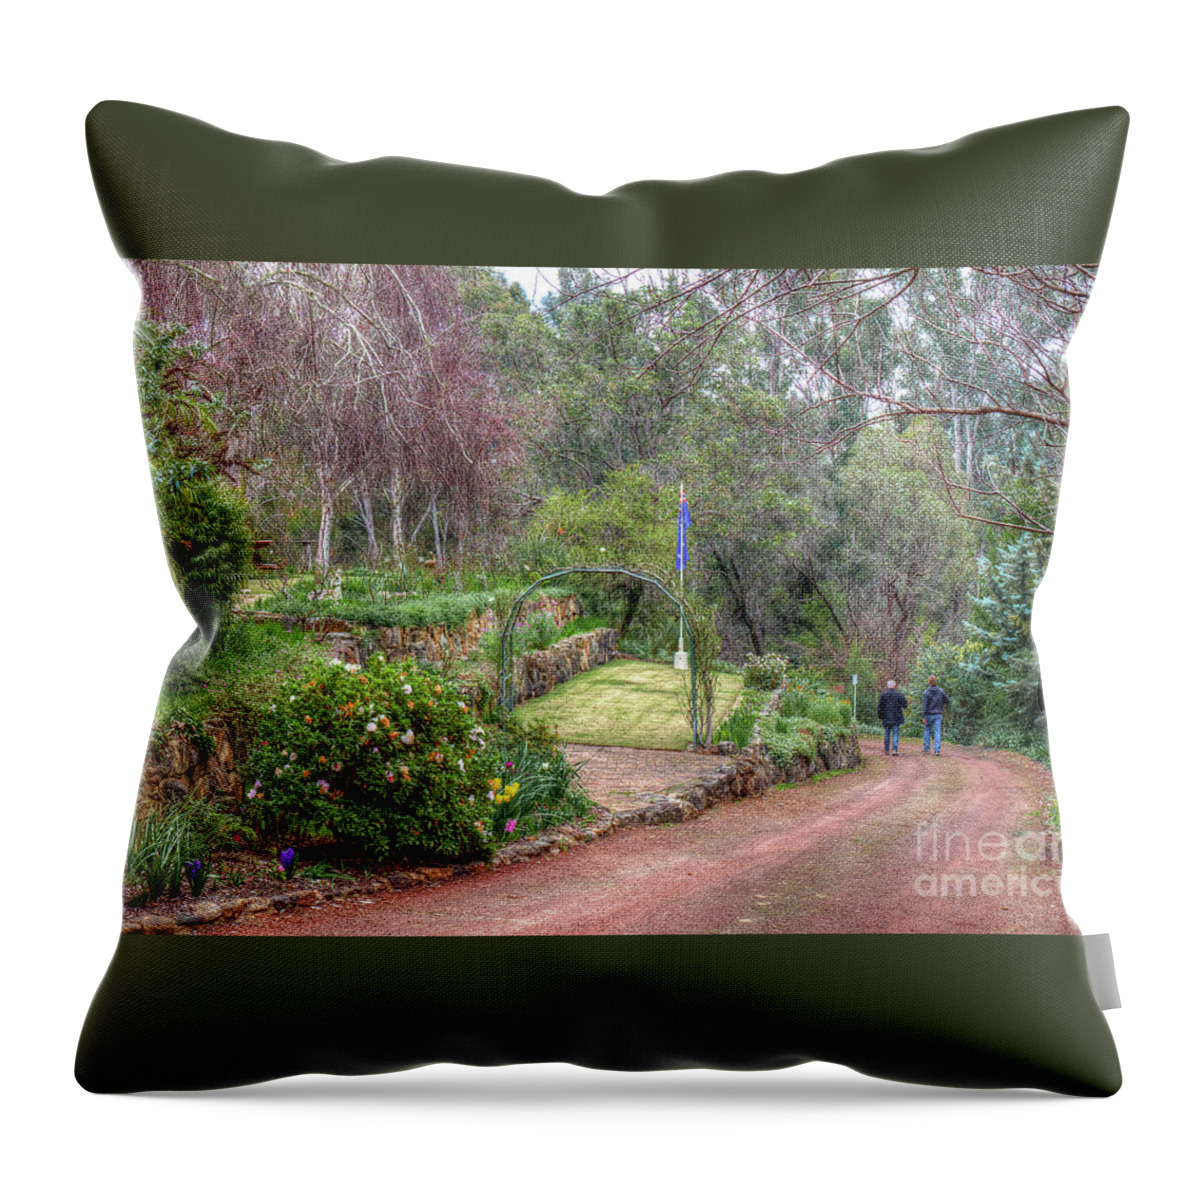 Garden Throw Pillow featuring the photograph Exploring Holberry by Elaine Teague